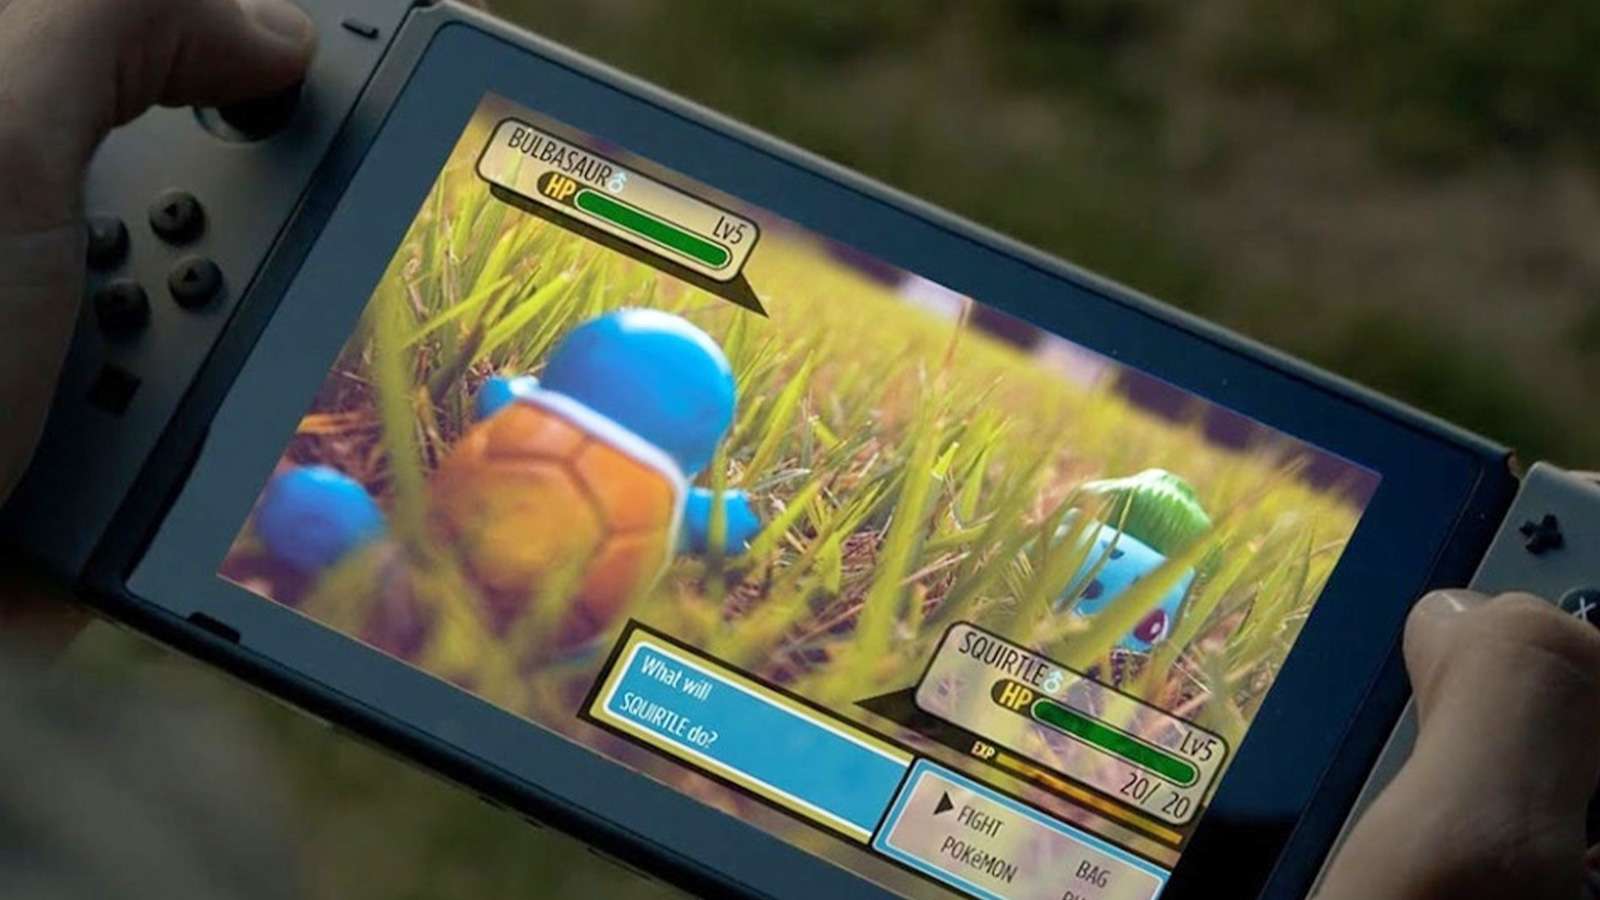 Screenshot of someone holding Nintendo Switch playing Pokemon.